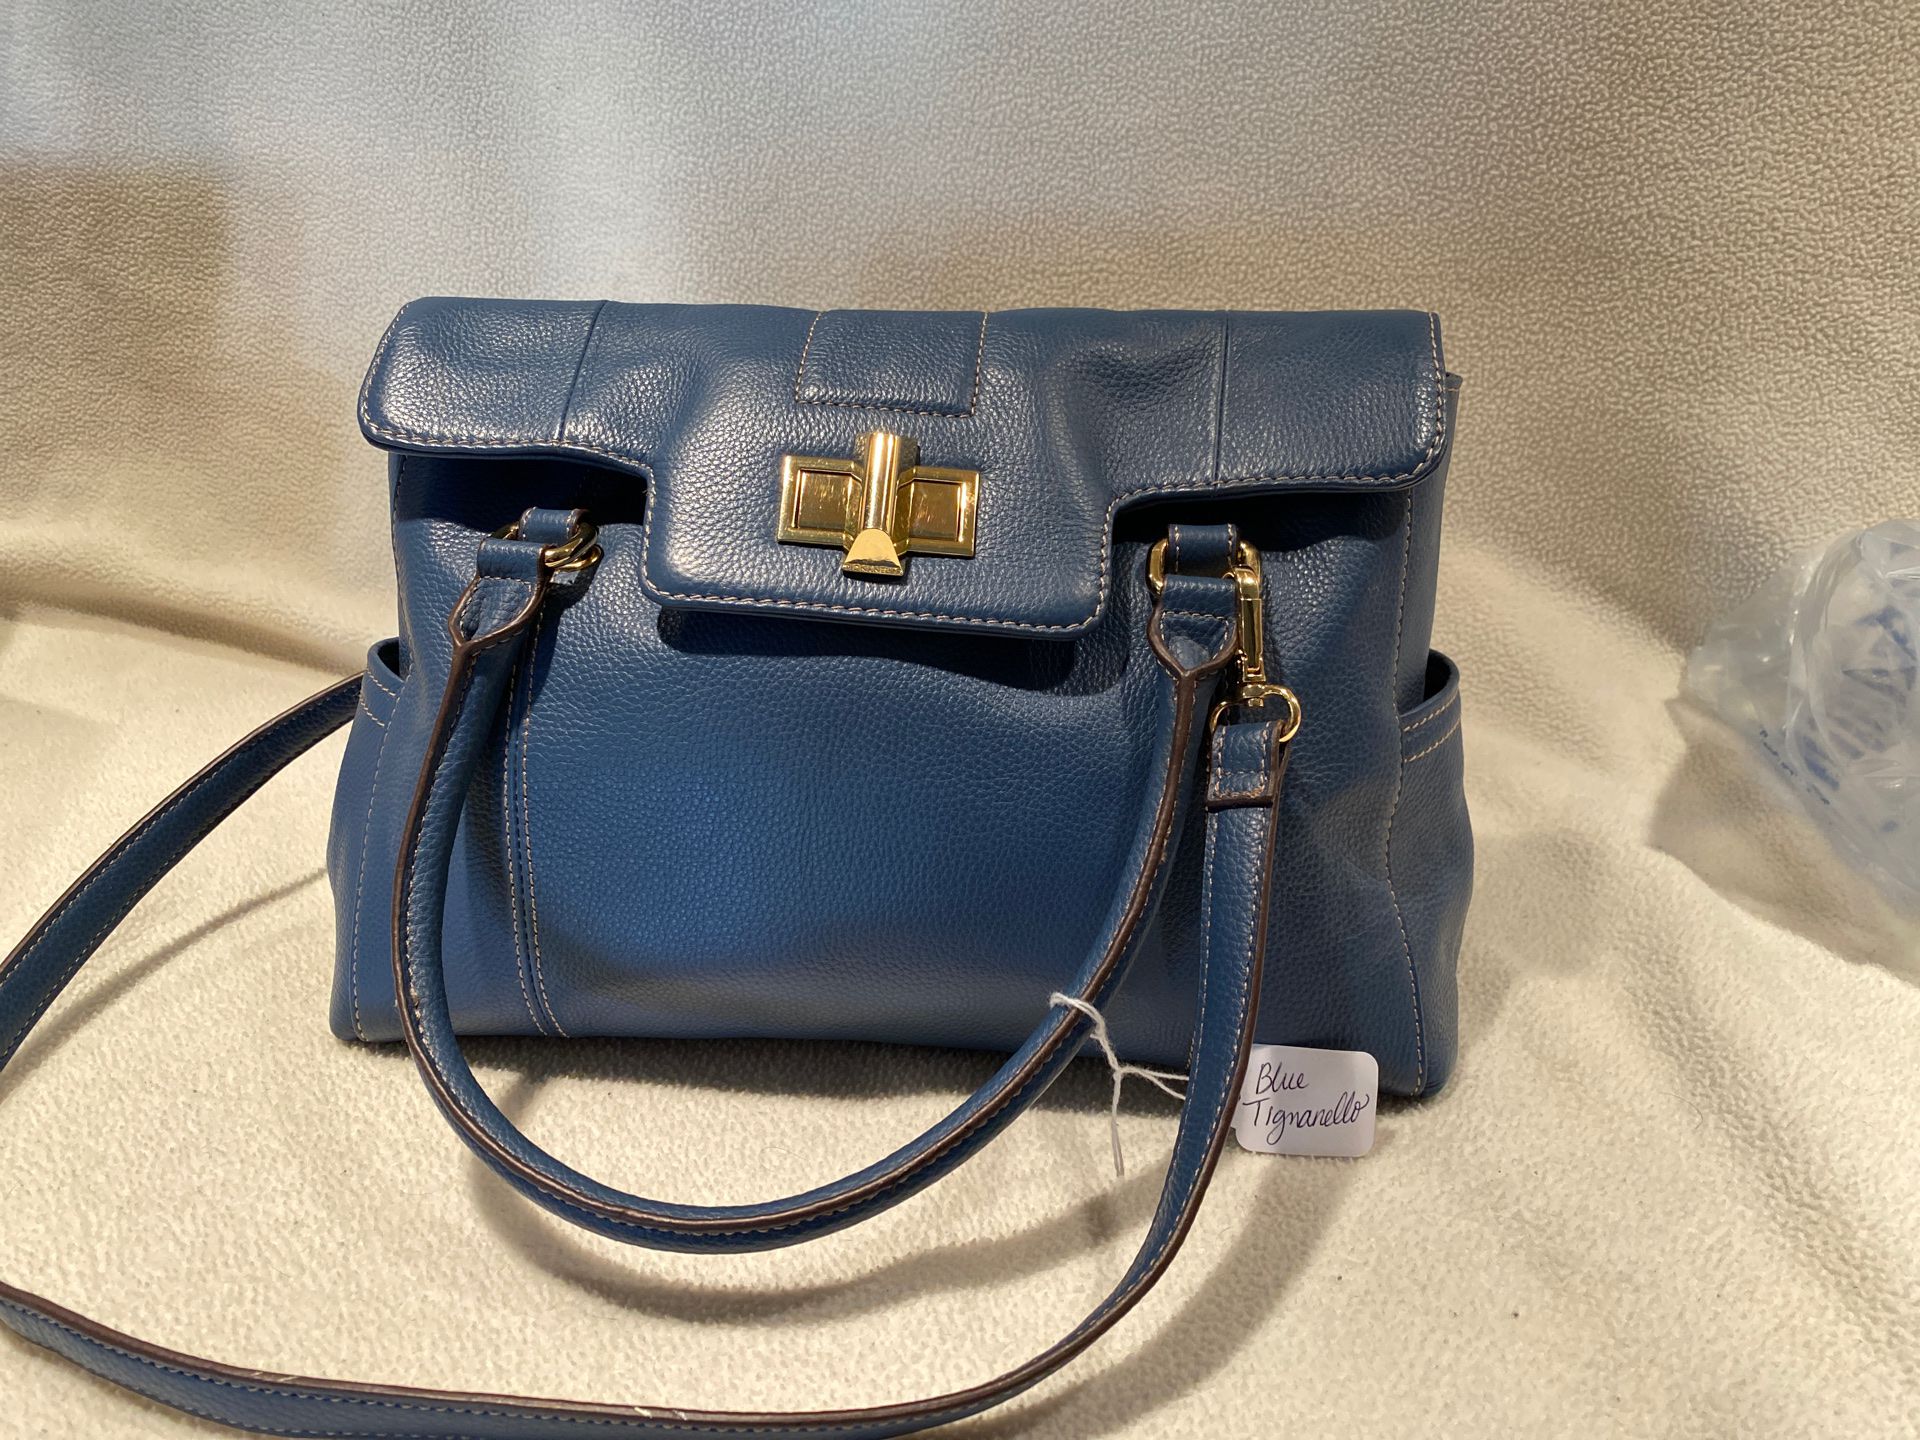 Blue Tignanello leather handbag. Never used.